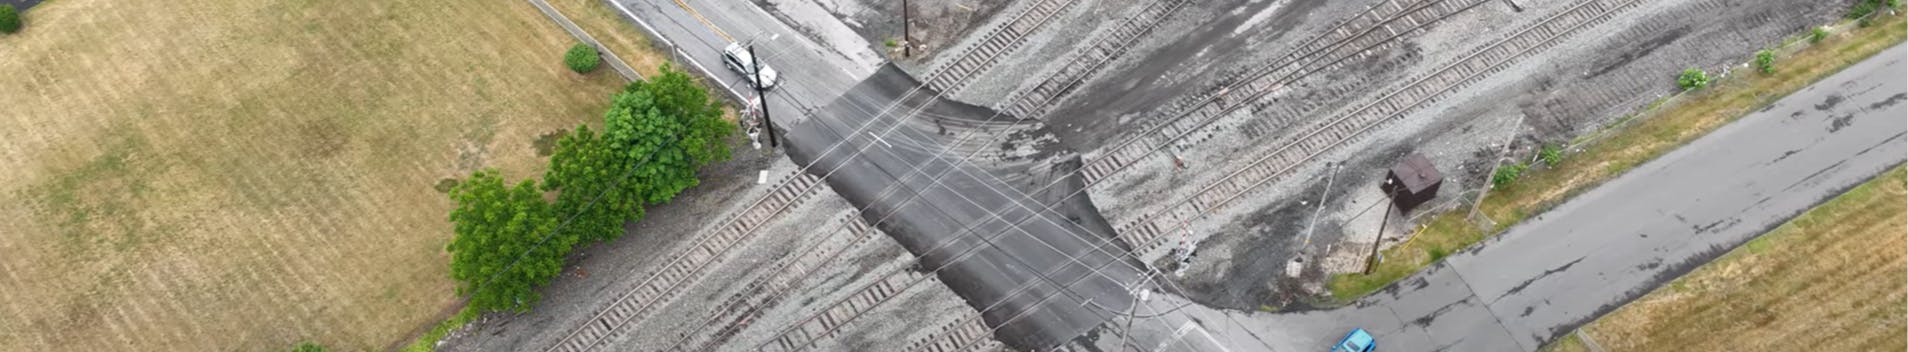 Rail Crossing Aerial View